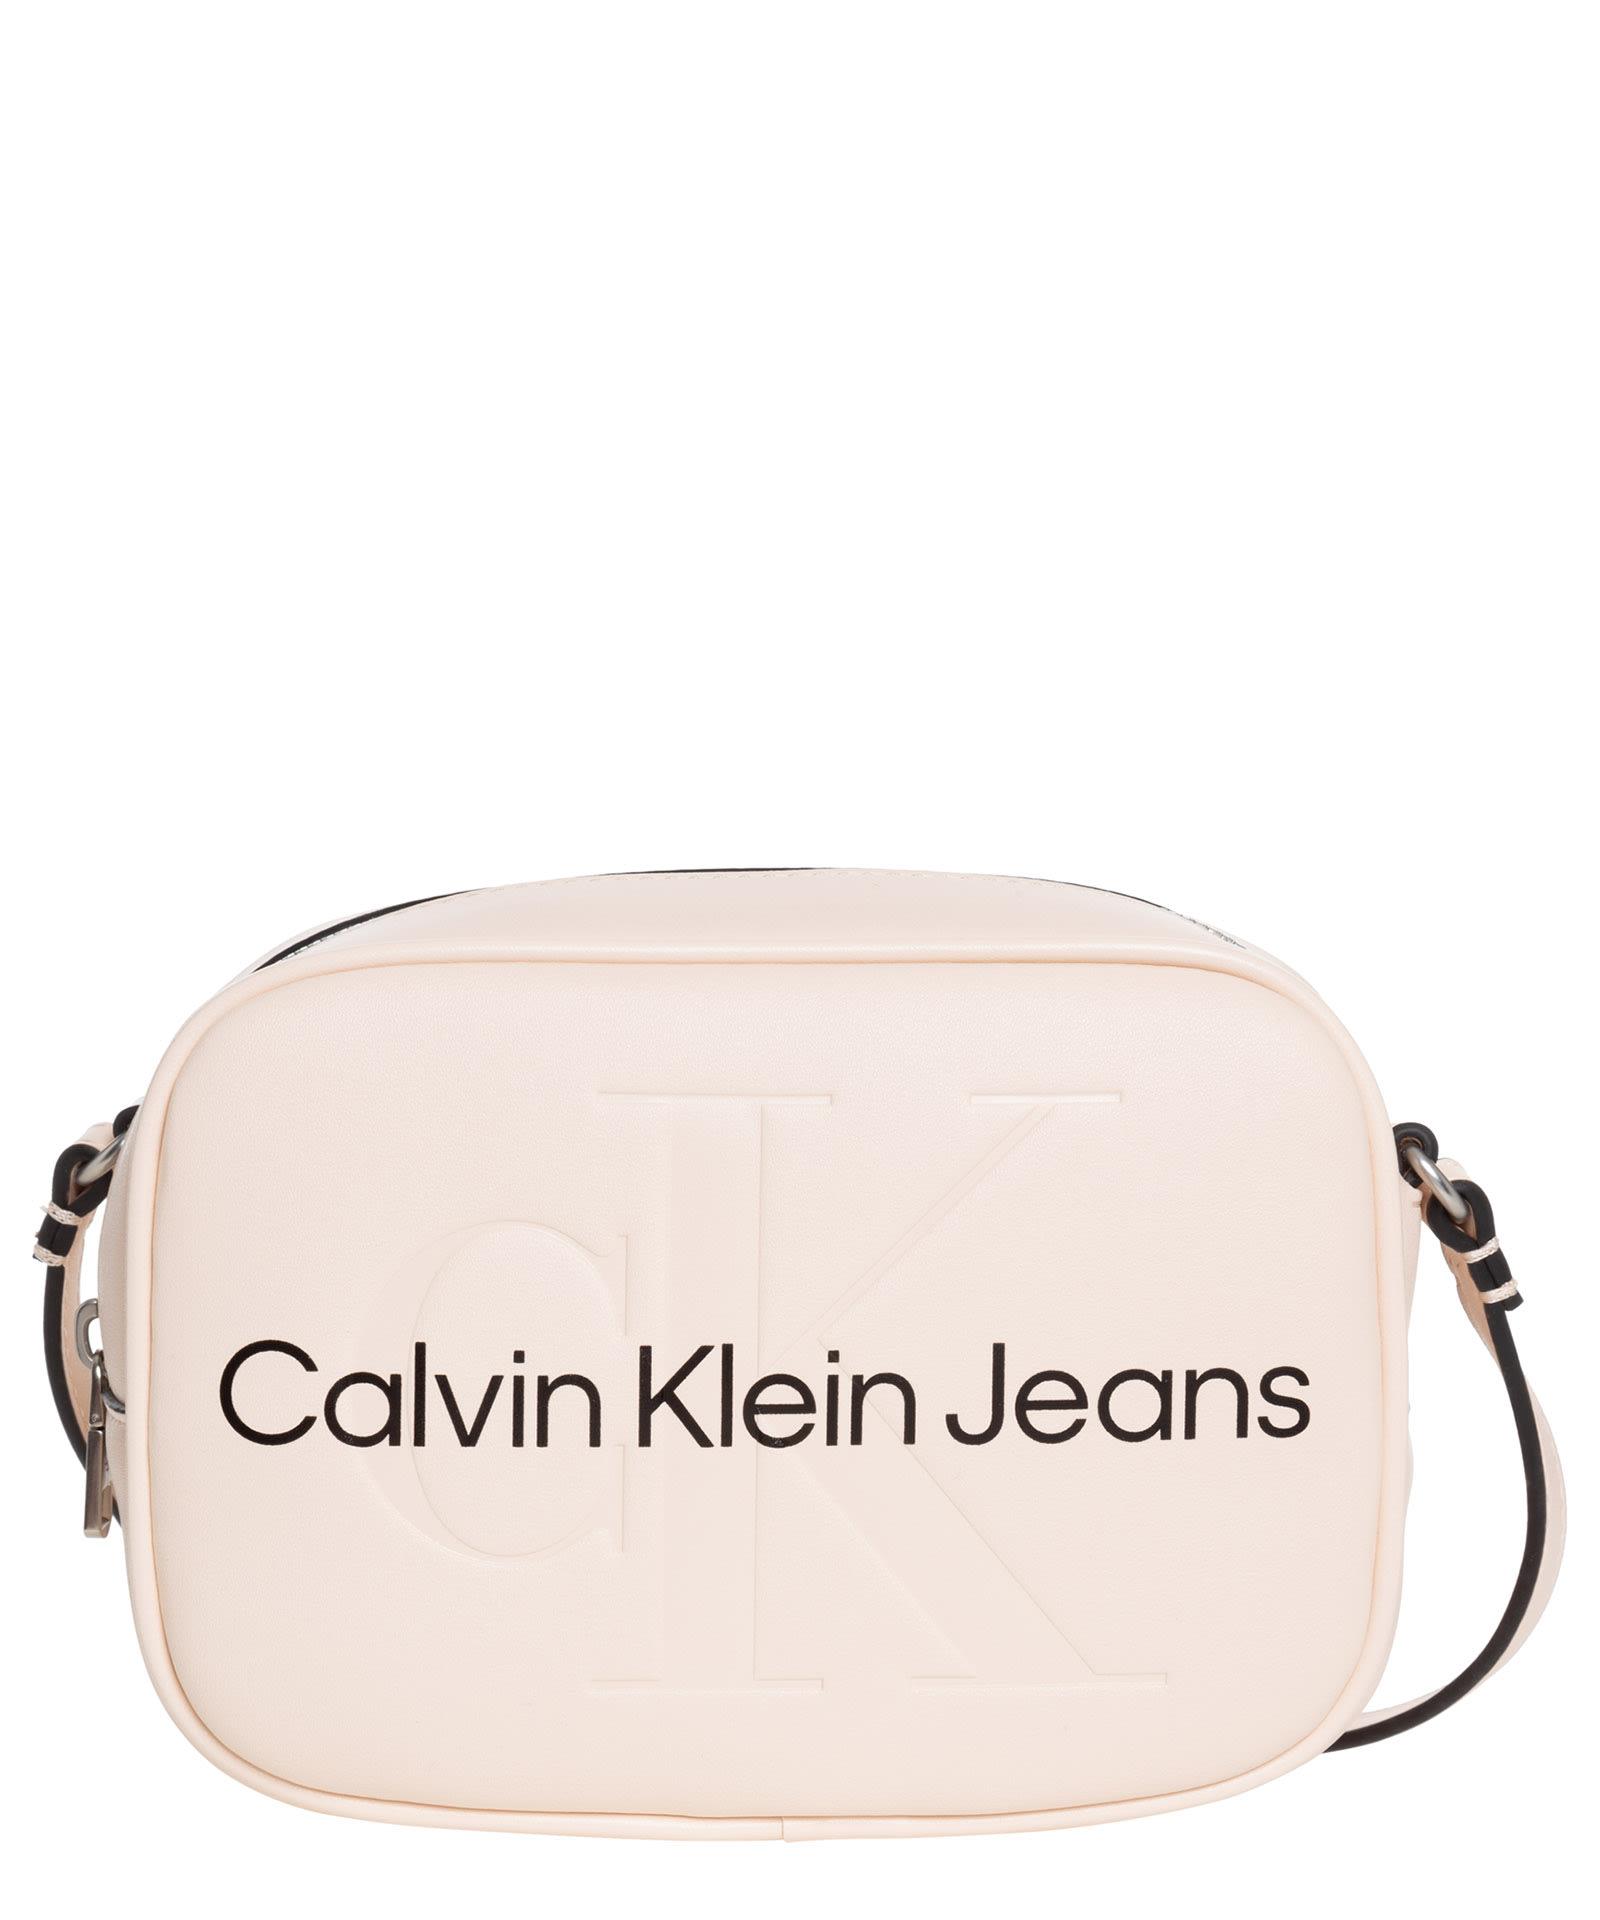 Calvin Klein Lucy Floral Print Crossbody Bag on SALE